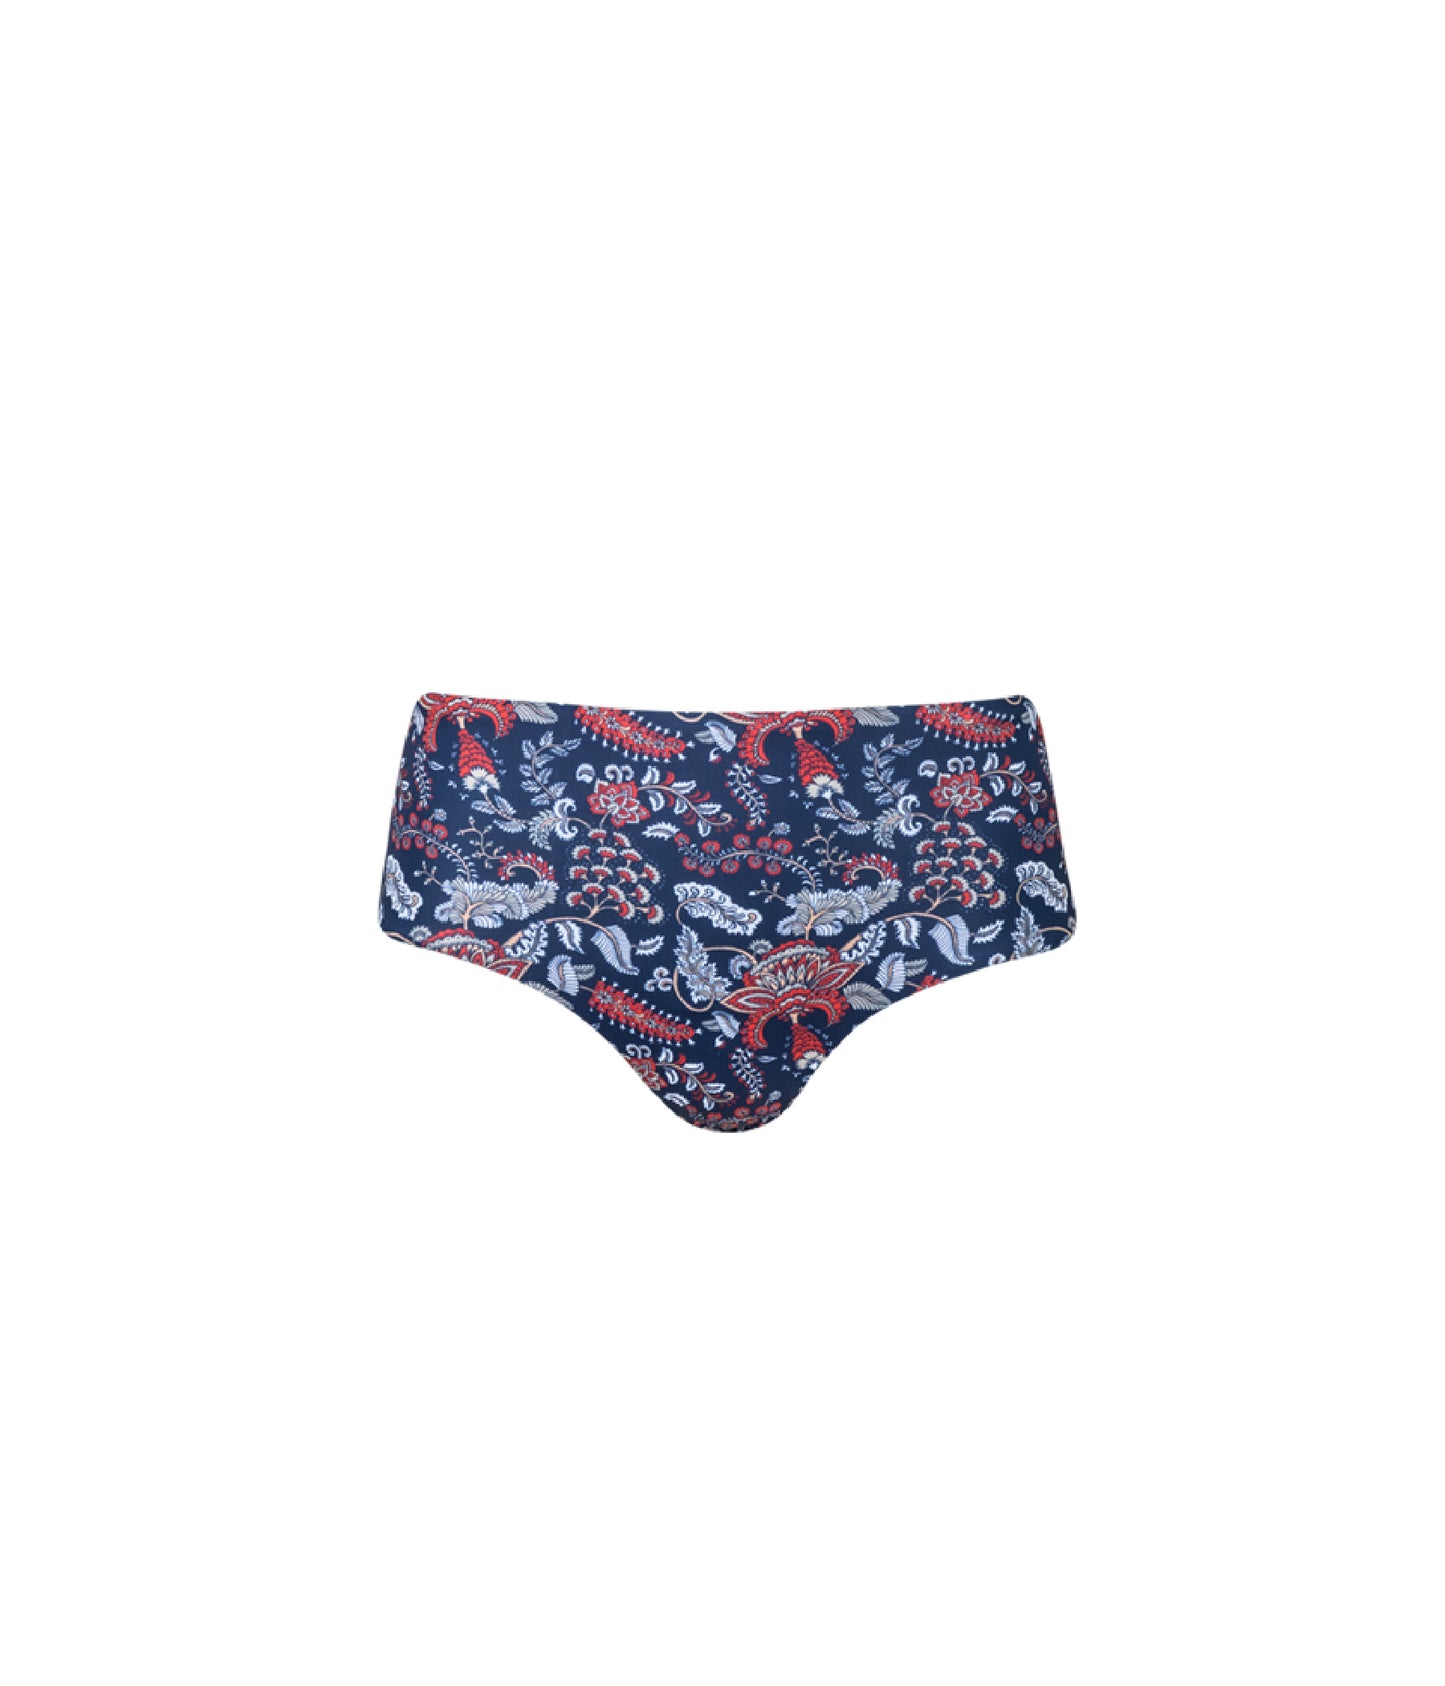 Verdelimon - Bikini Bottom - Angeles - Printed - Blue Floral - Front